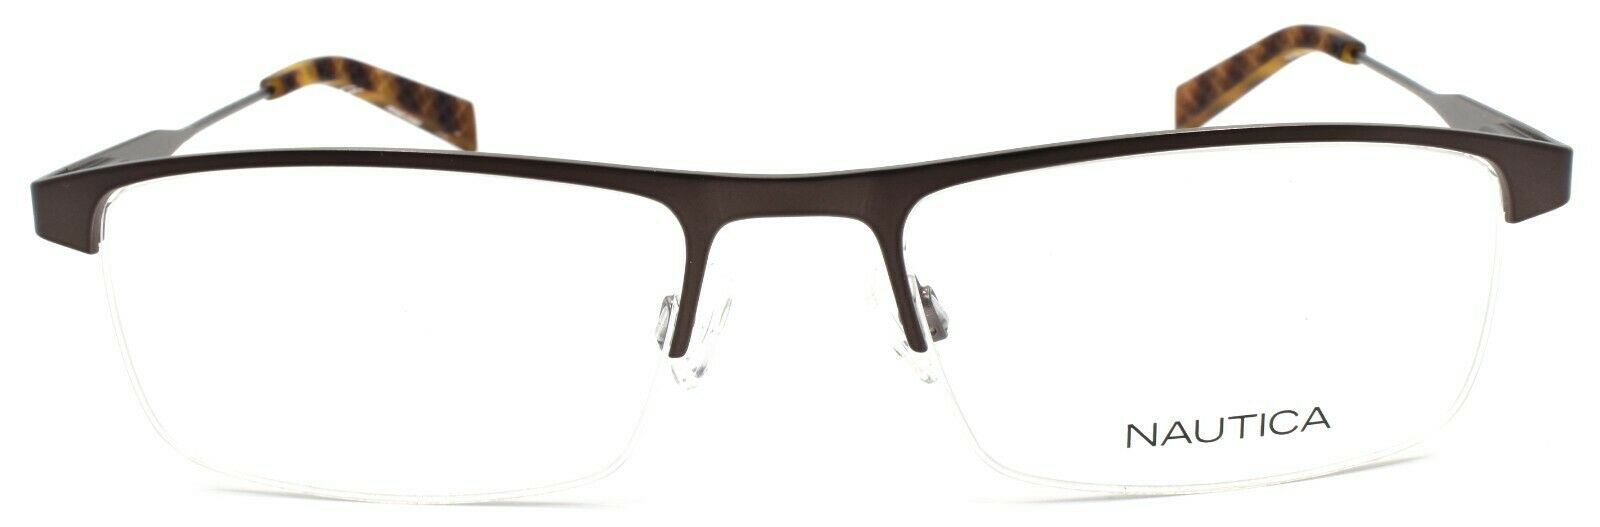 2-Nautica N7296 030 Men's Eyeglasses Frames Half-rim 53-18-140 Matte Gunmetal-886895432528-IKSpecs